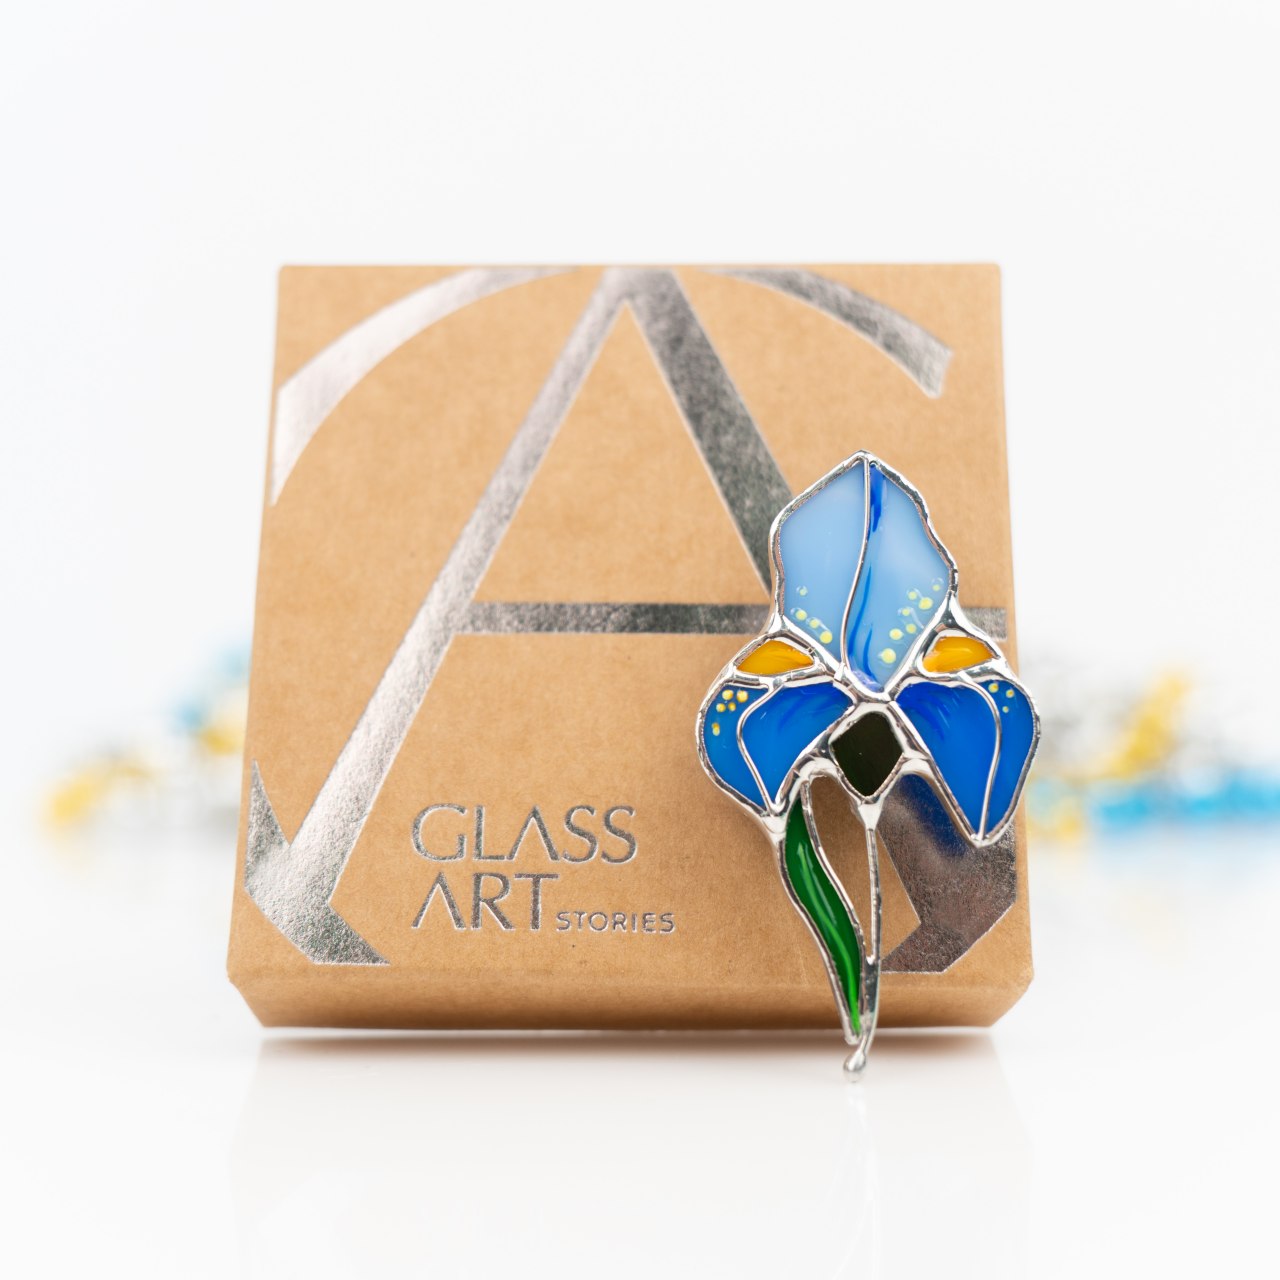 Handmade bluish iris brooch of stained glass